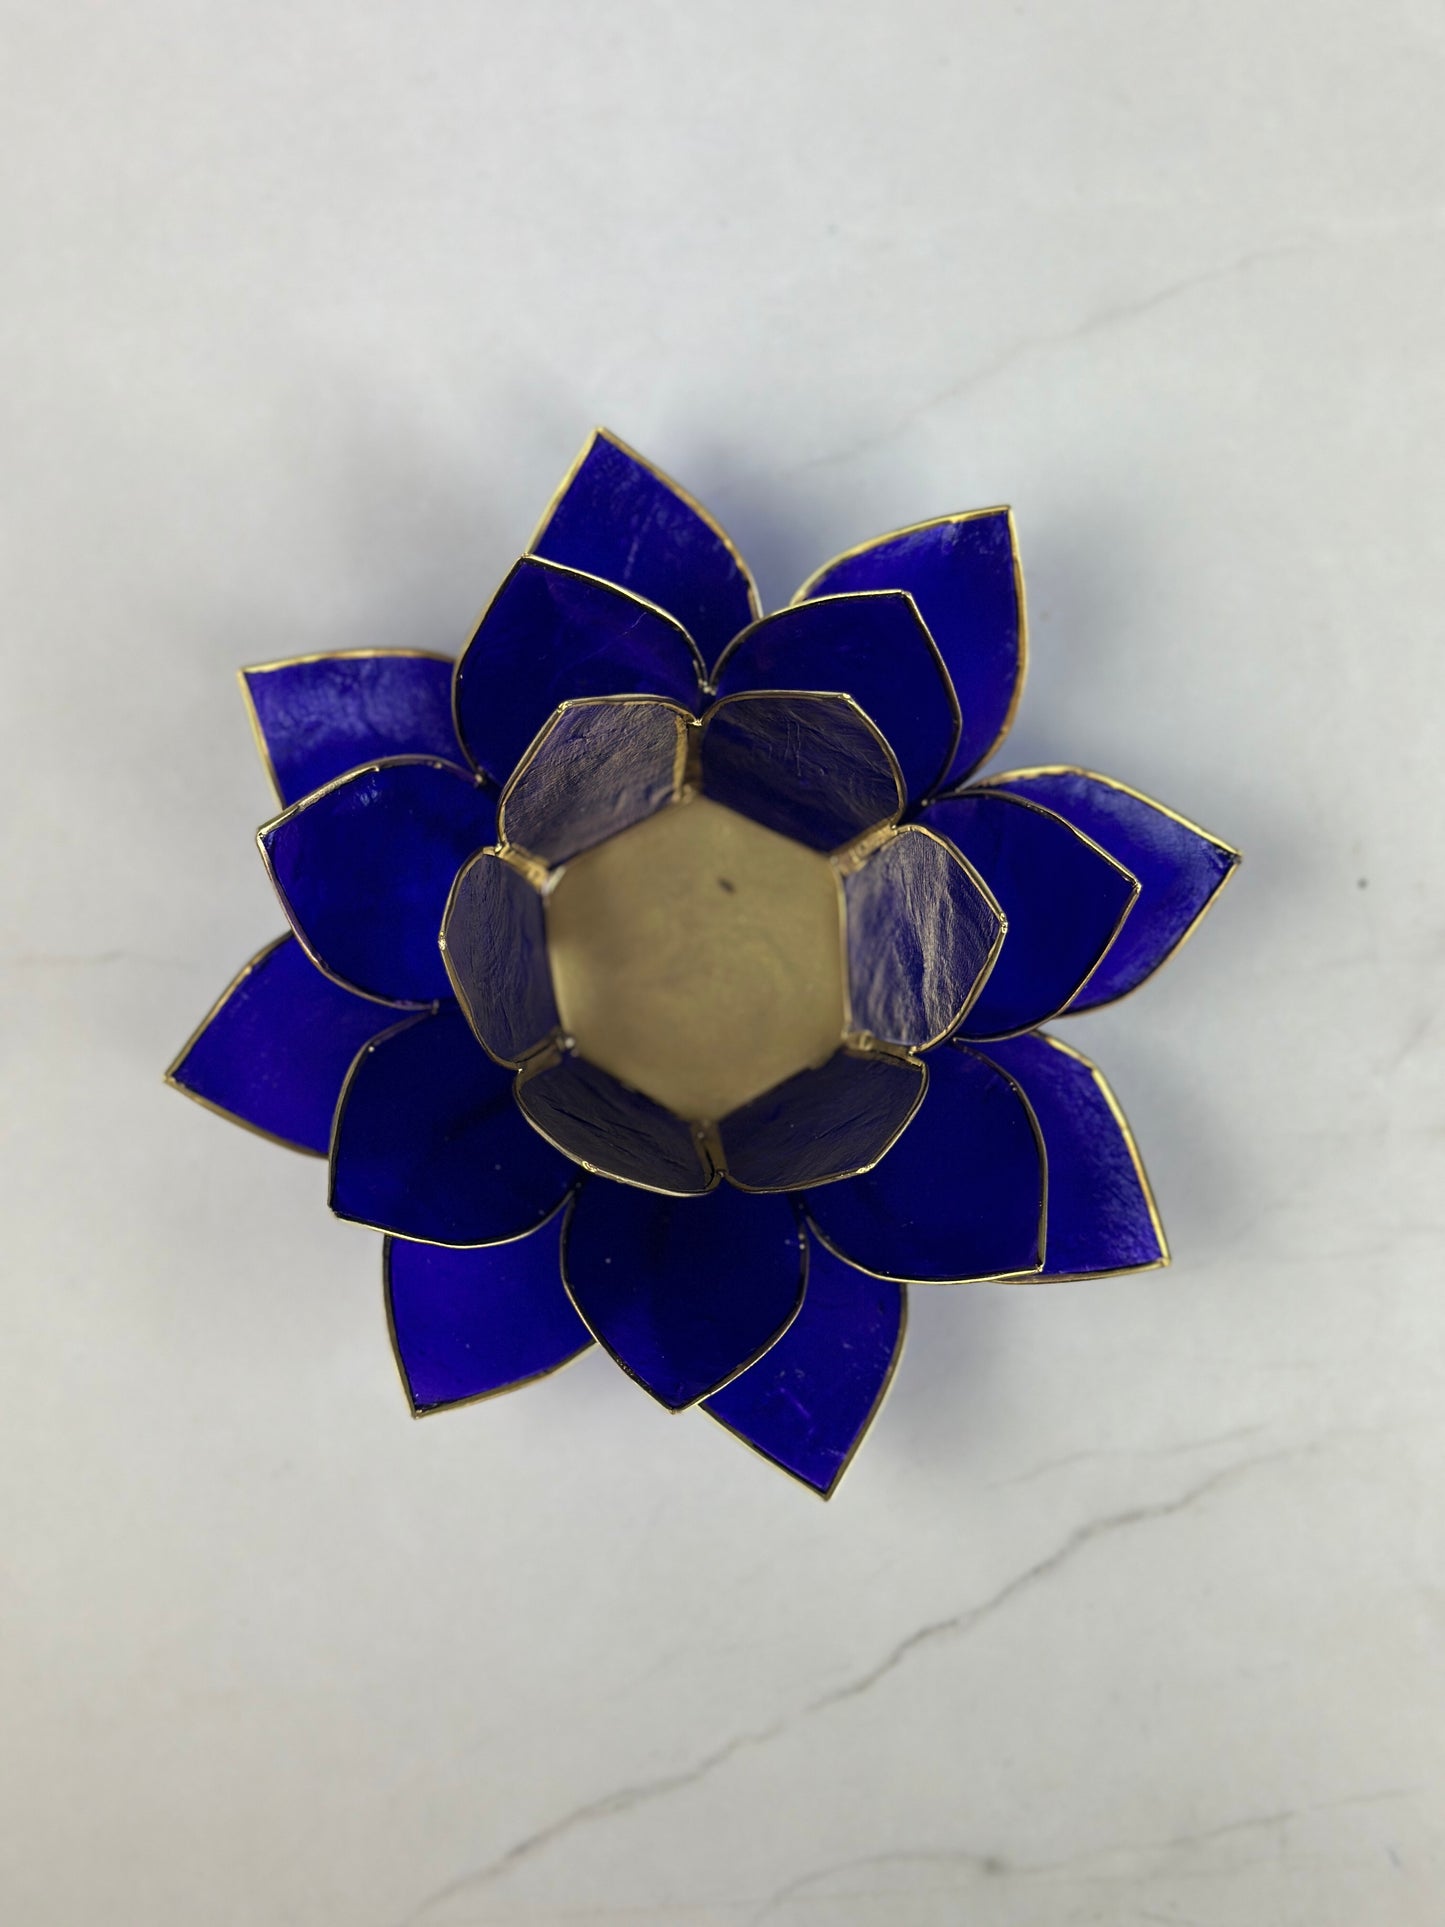 Ajna Chakra Lotus - Indigo (blau) und Gold